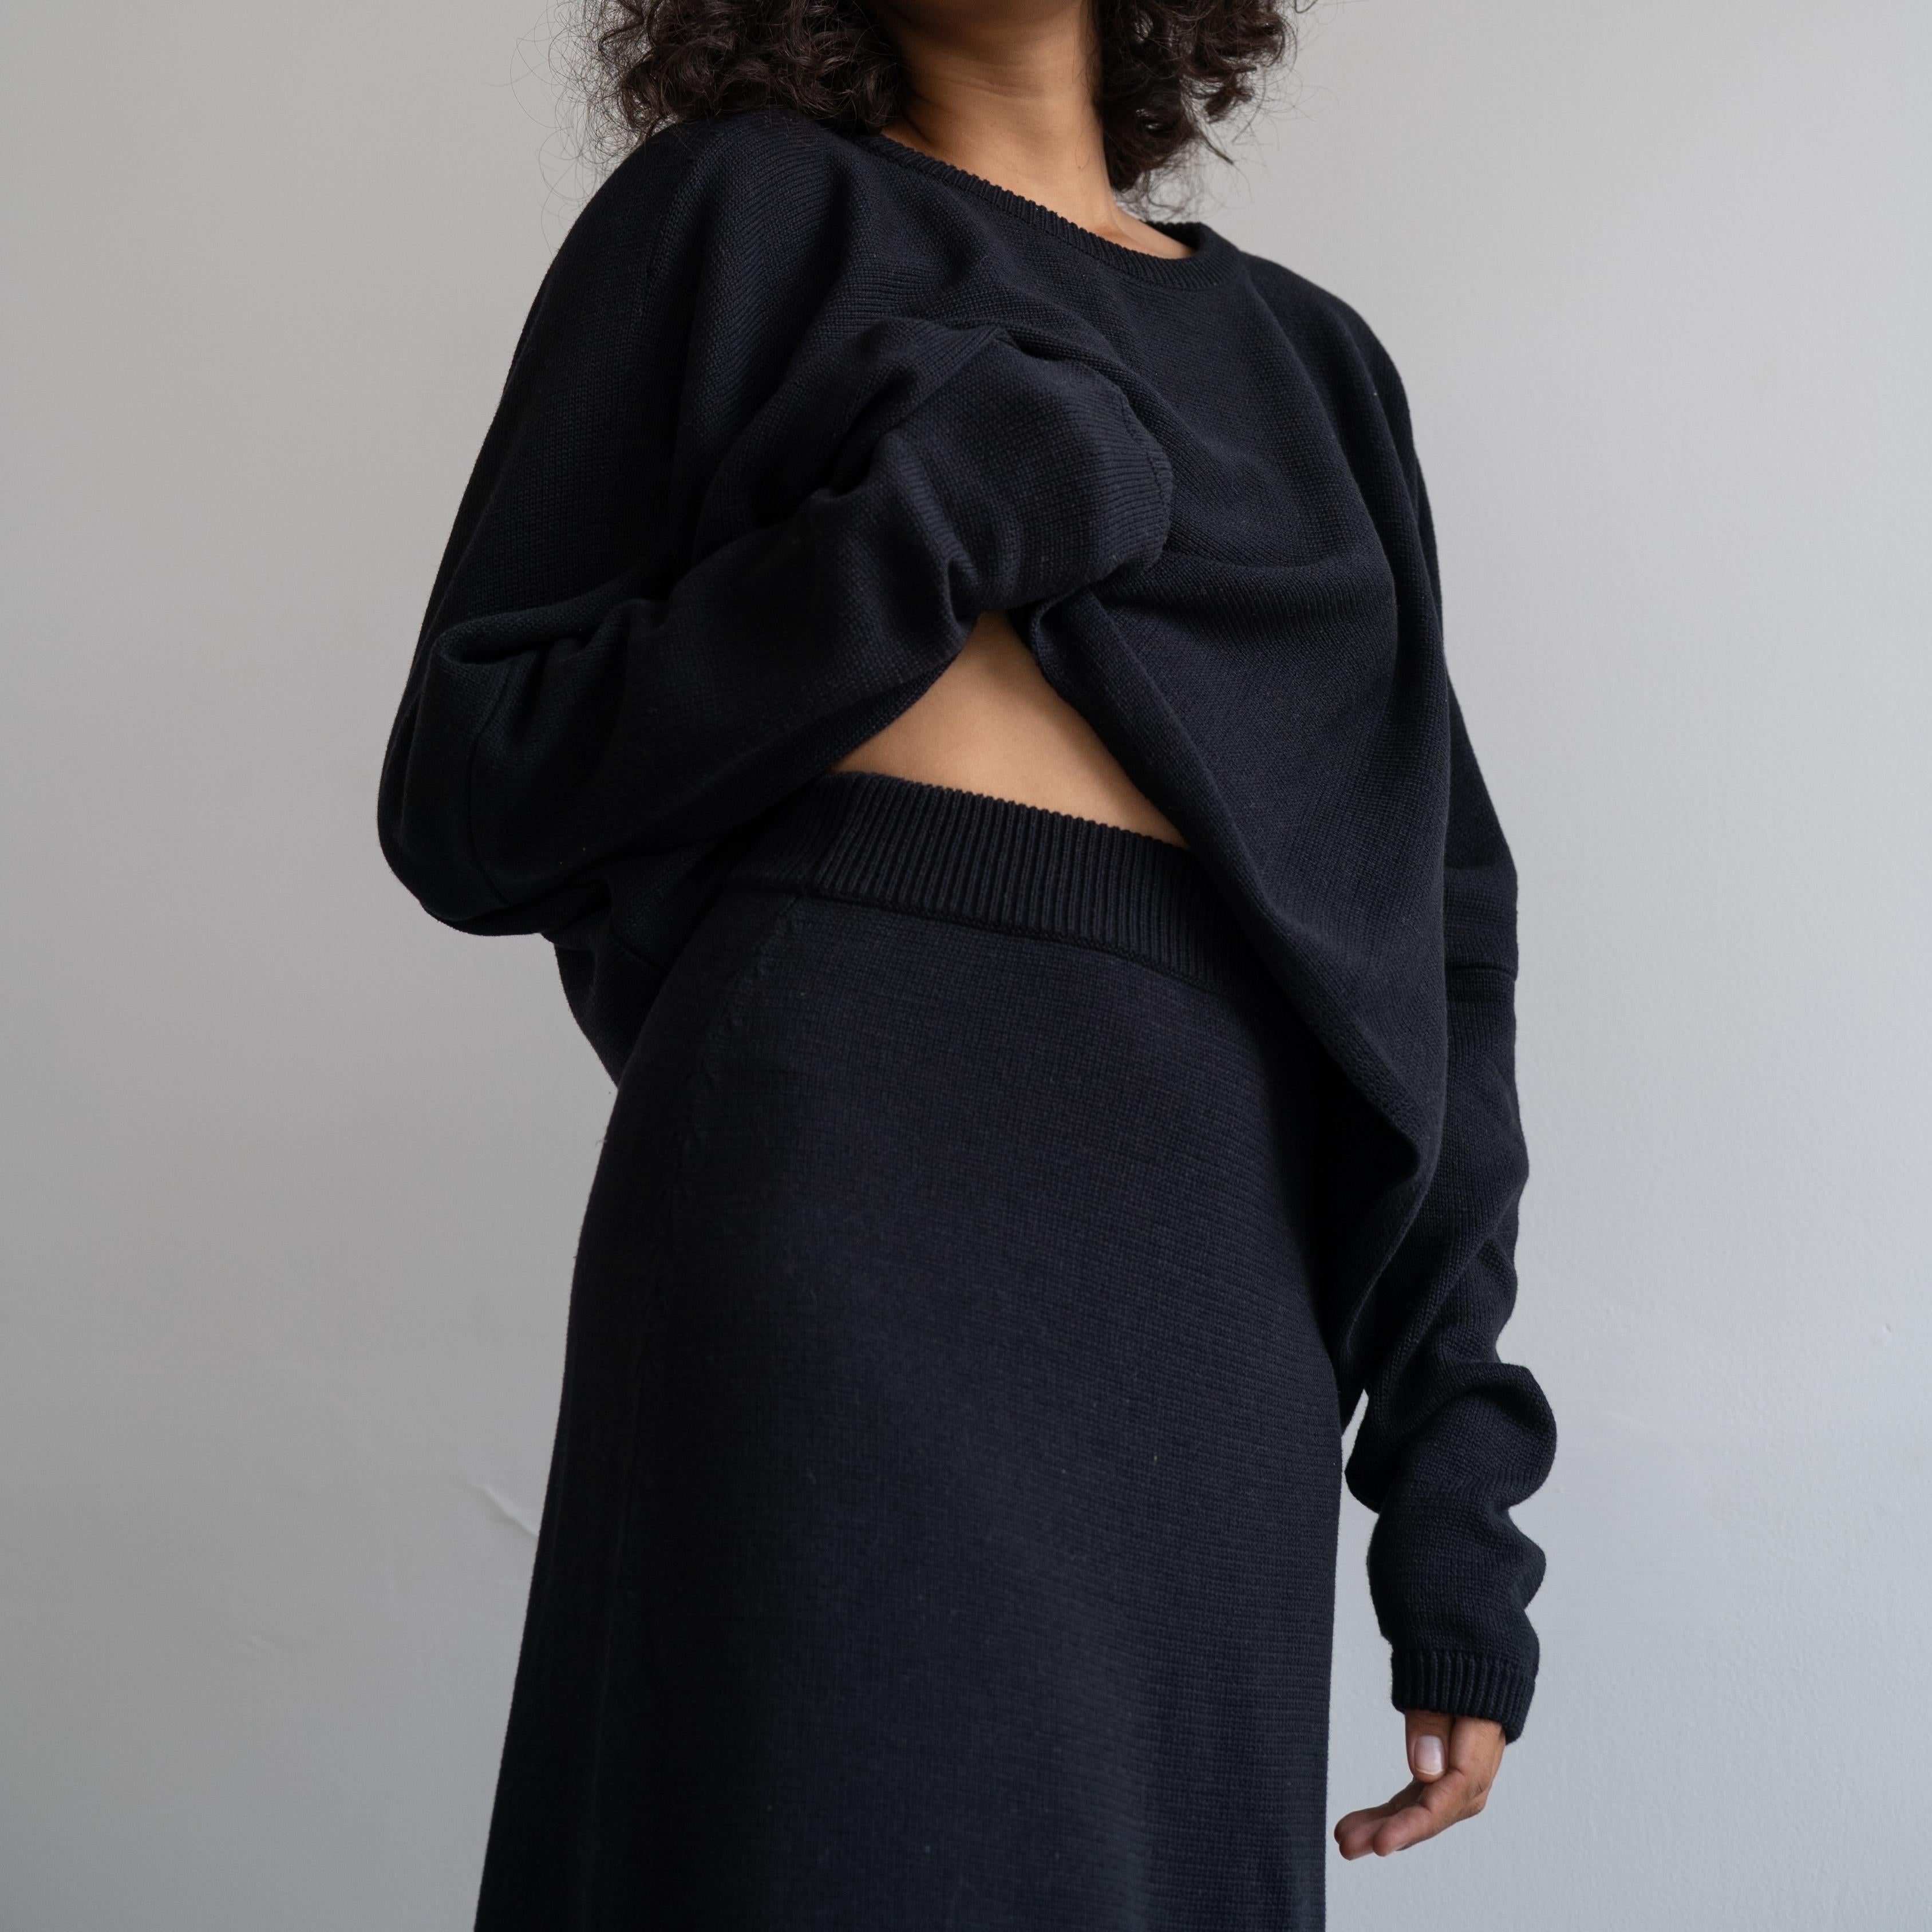 NIAS - BLACK Crop Sweater